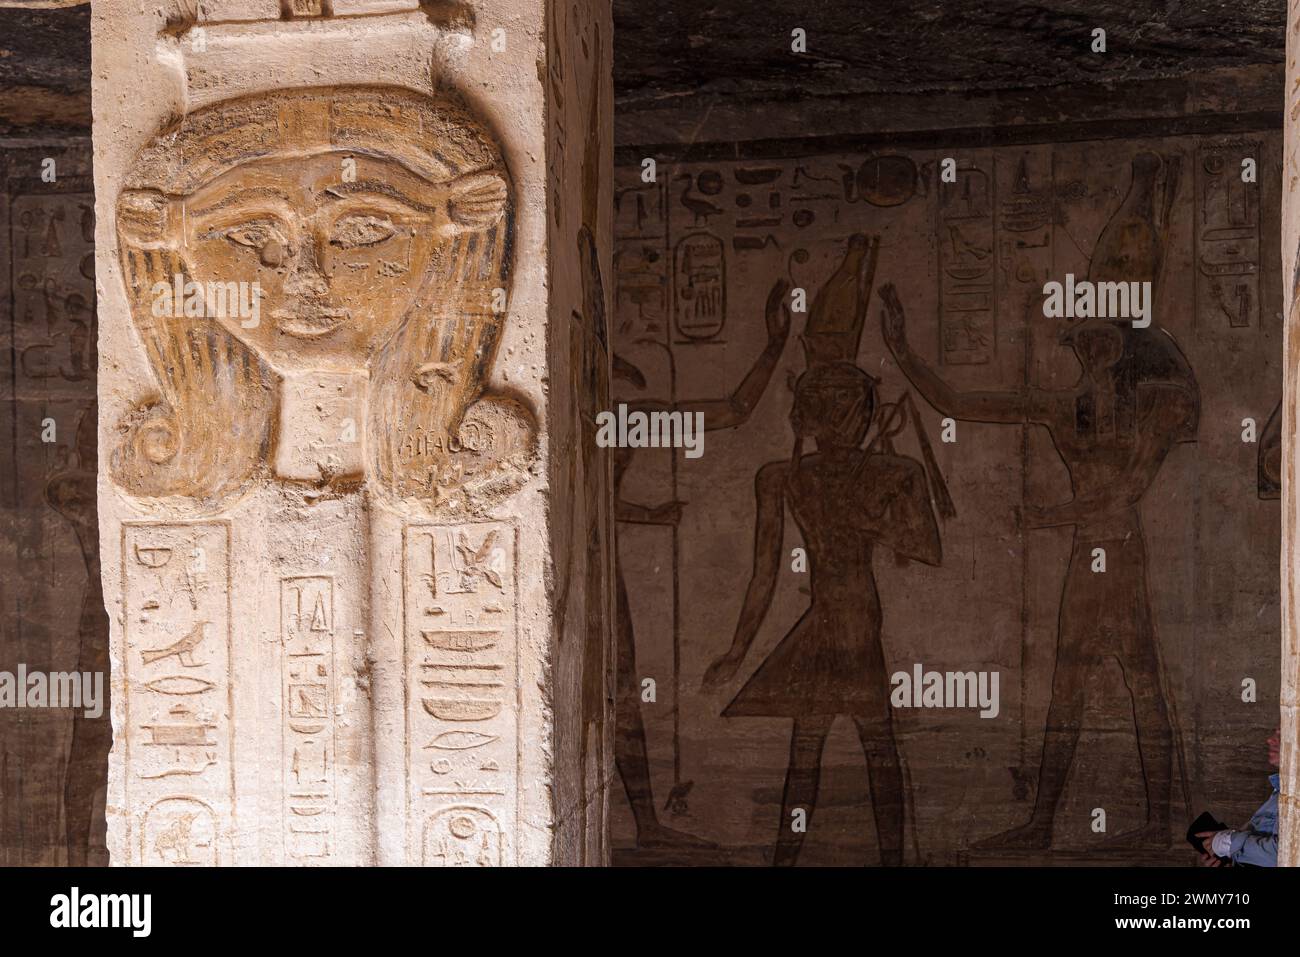 Egitto, Abu Simbel, monumenti nubiani da Abu Simbel a file, patrimonio mondiale dell'UNESCO, tempio Nefertari, colonna Hathor Foto Stock